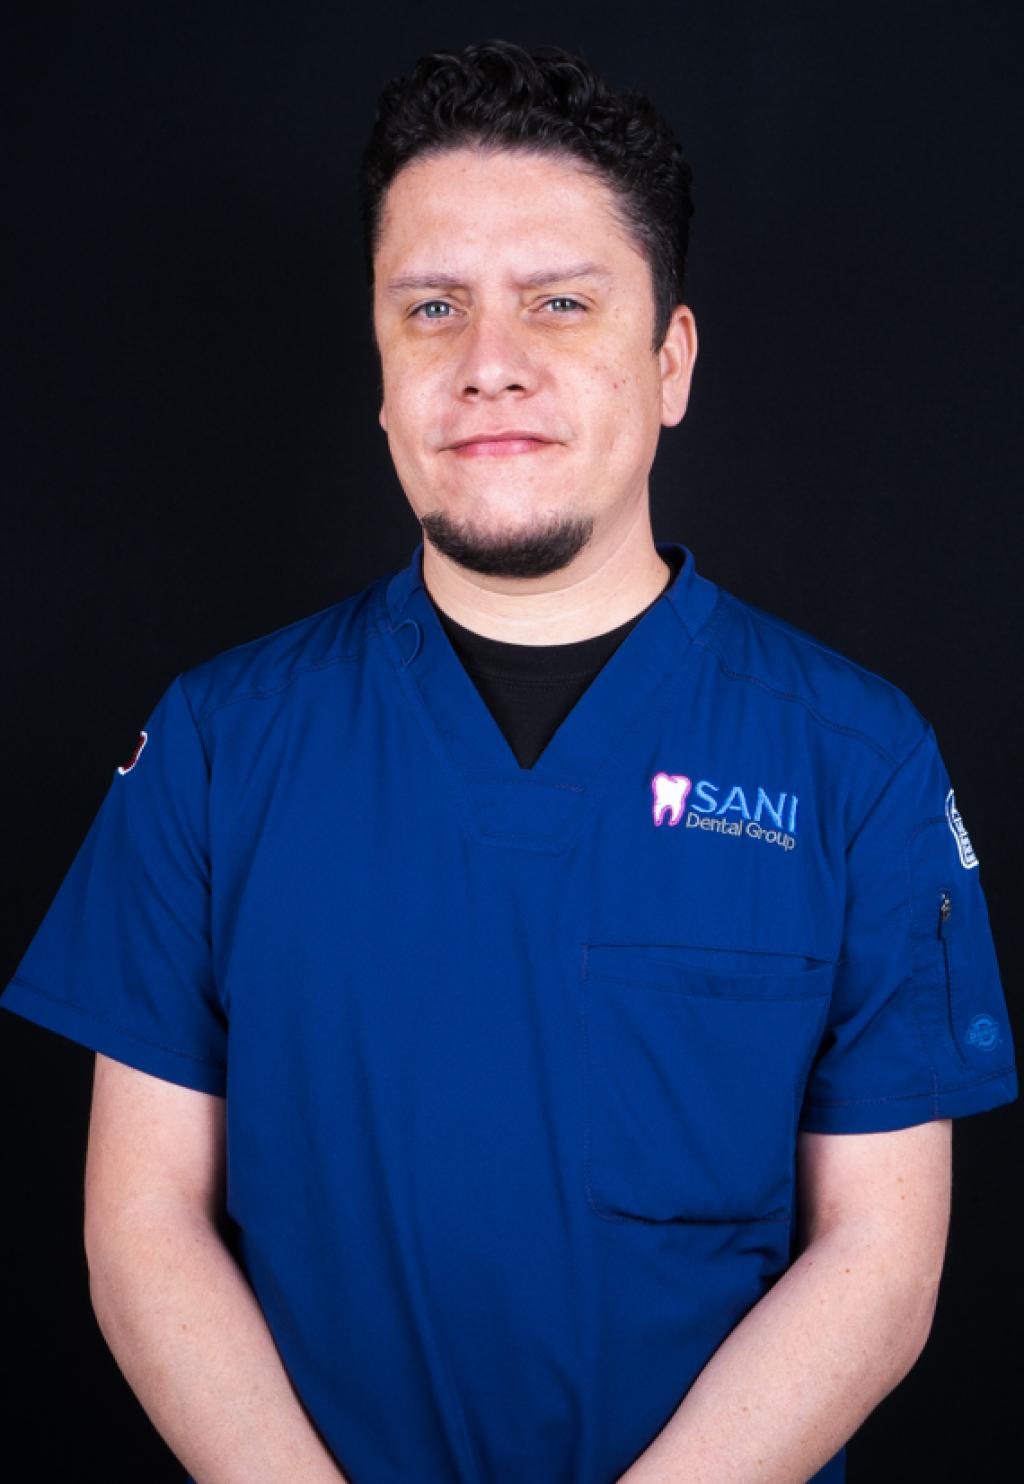 Dr. Christian Baldomero Estrada Saldivar - Sani Dental Group